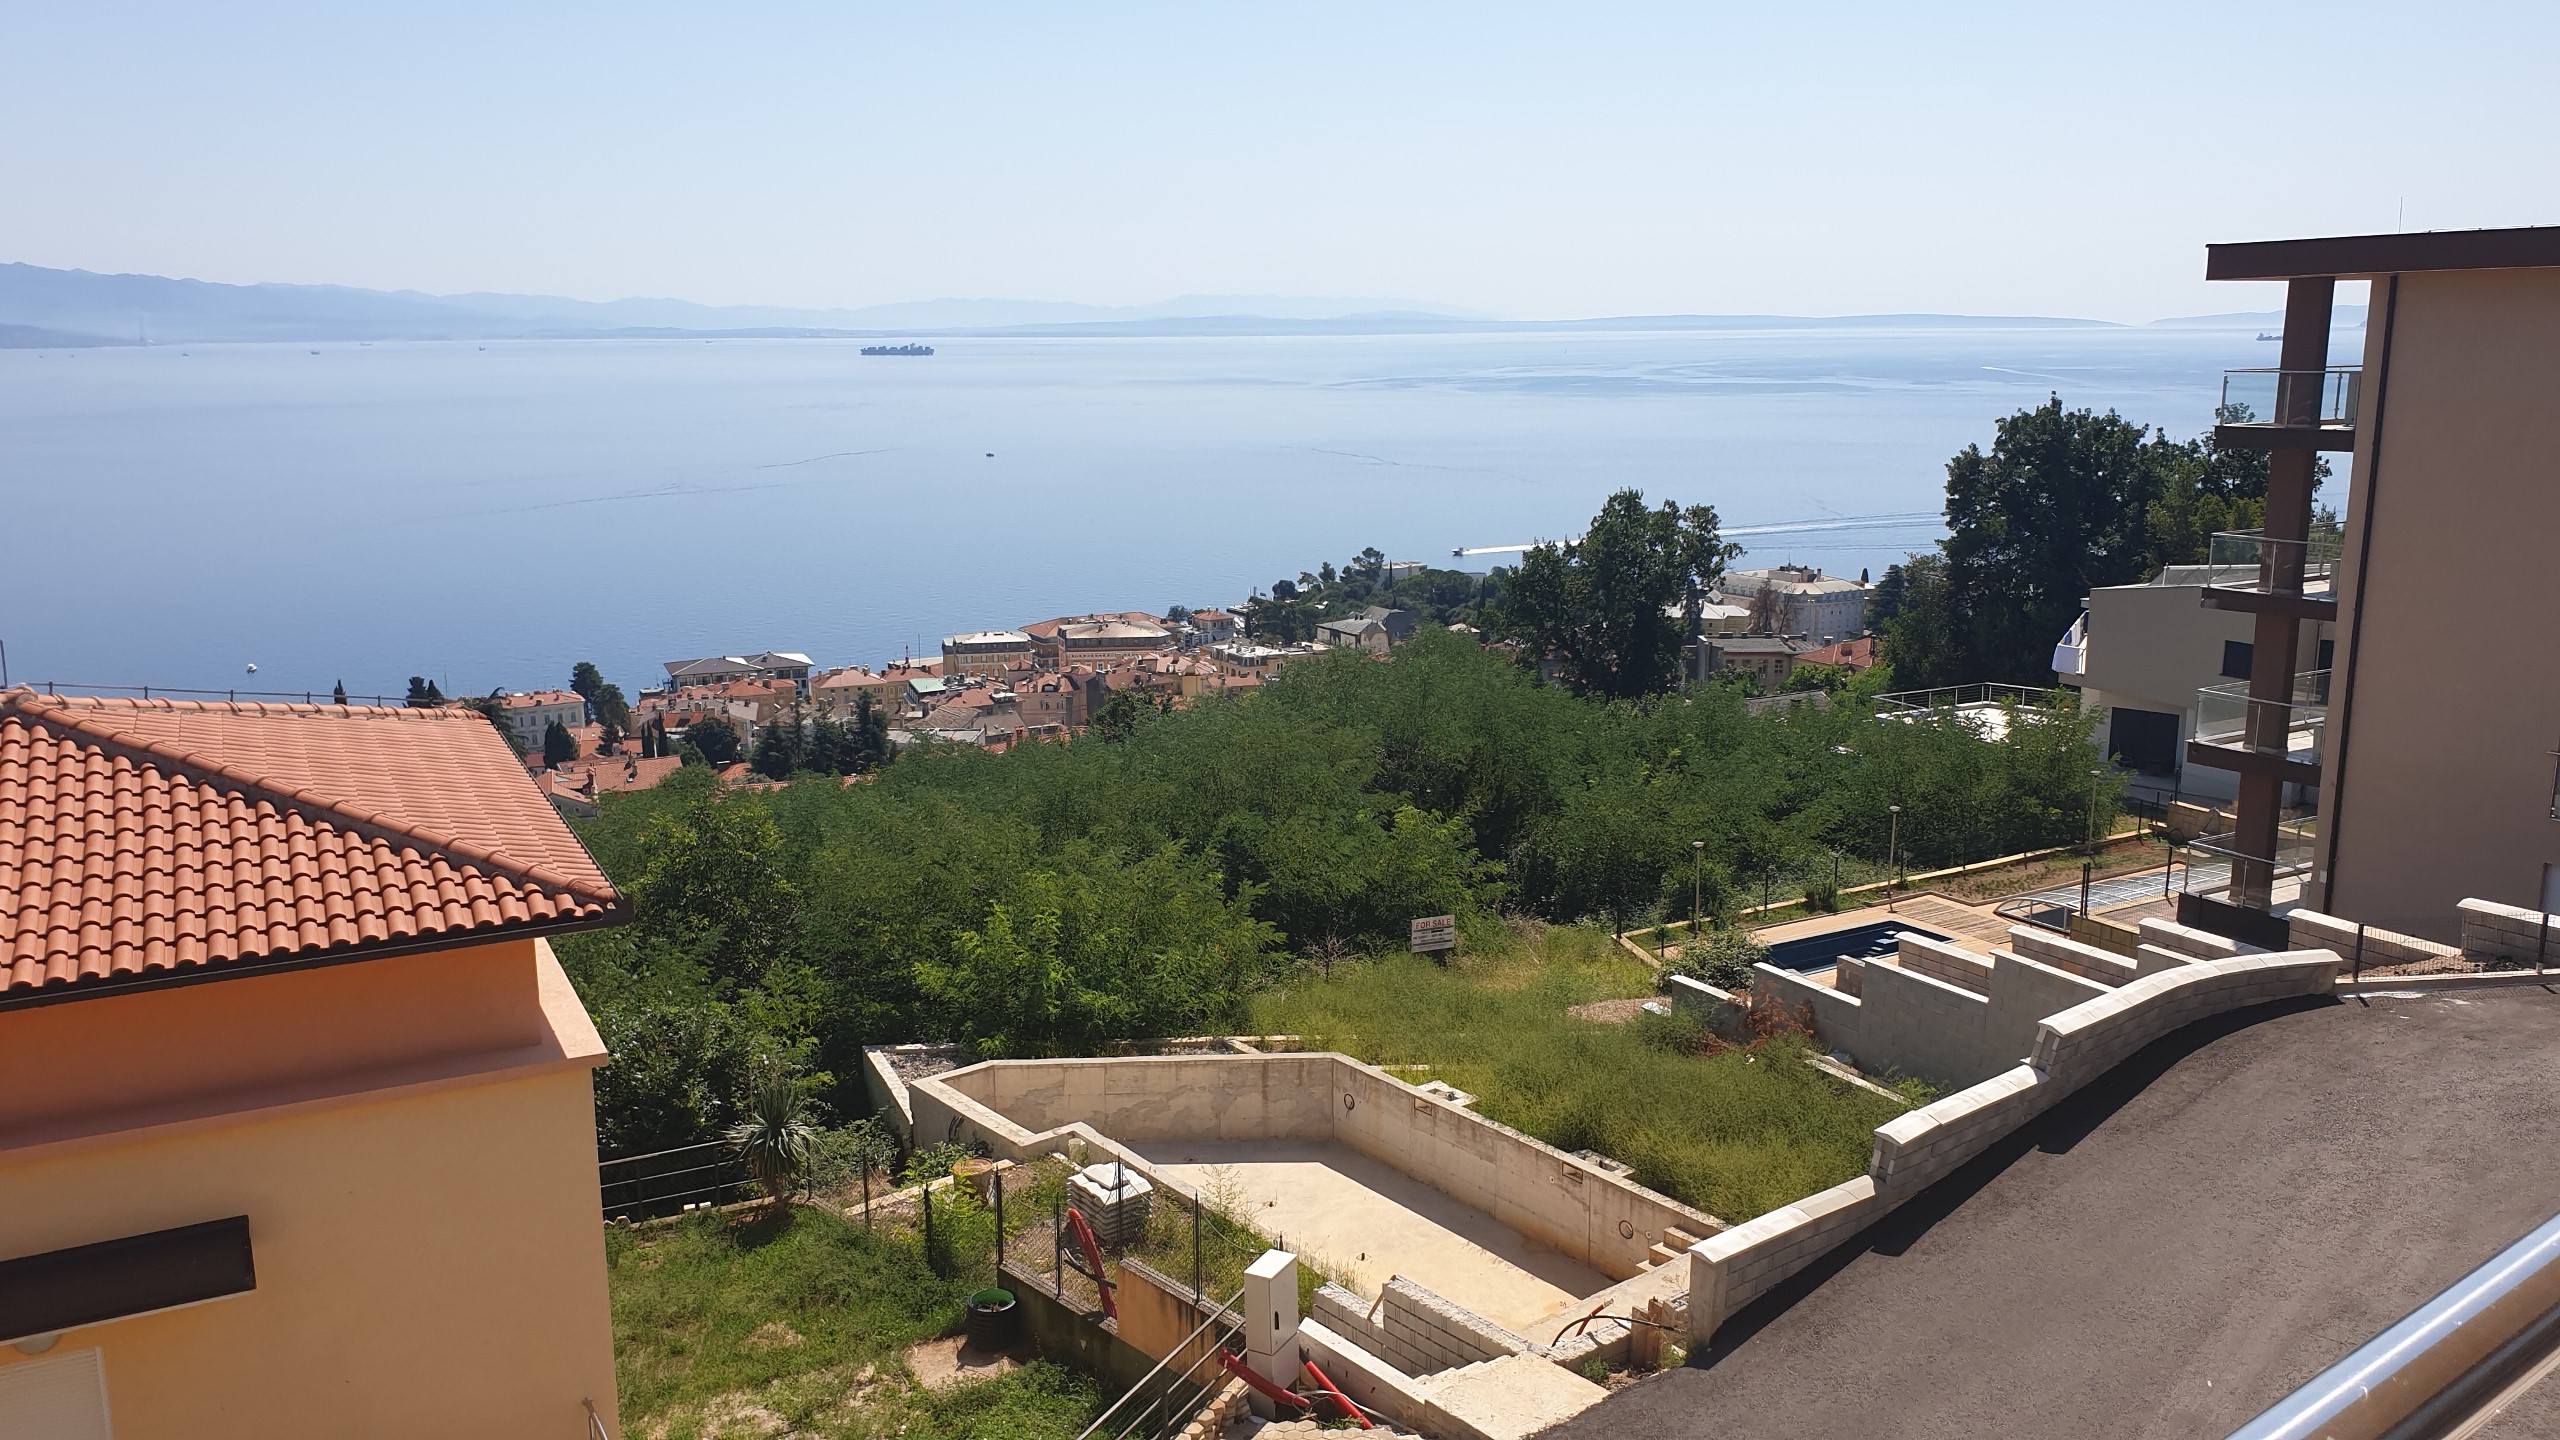 Luxury real estate Croatia Farkaš sells new luxury apartments in Opatija